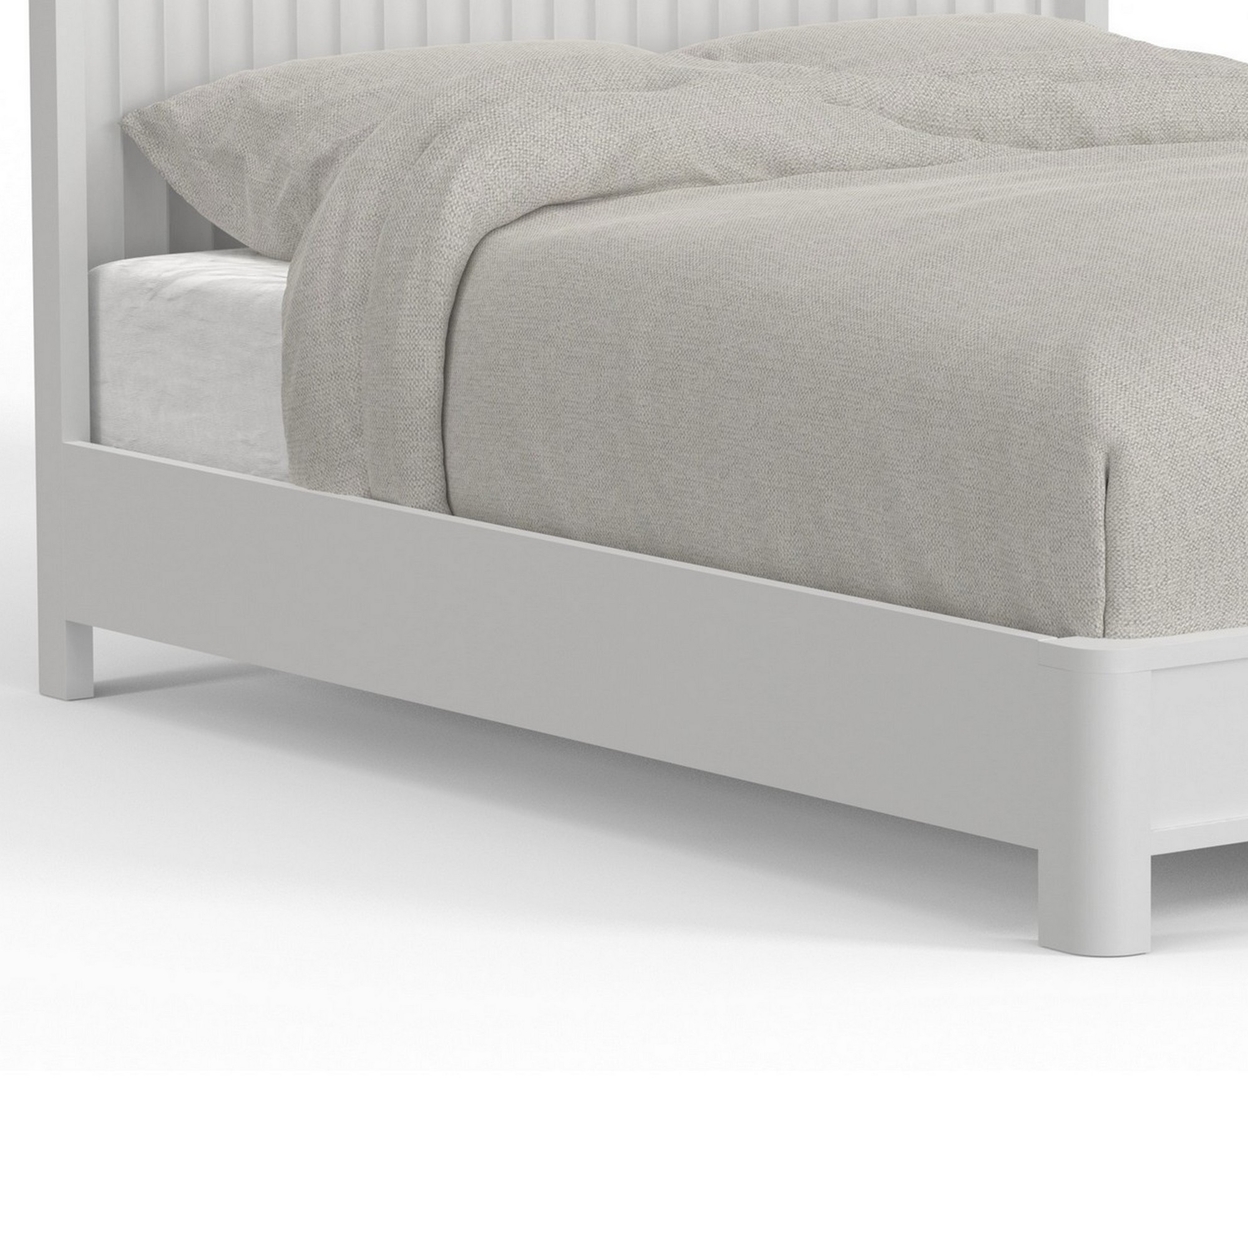 Aya Handcrafted Full Bed With Scalloped Motif Panel Headboard, White Wood- Saltoro Sherpi